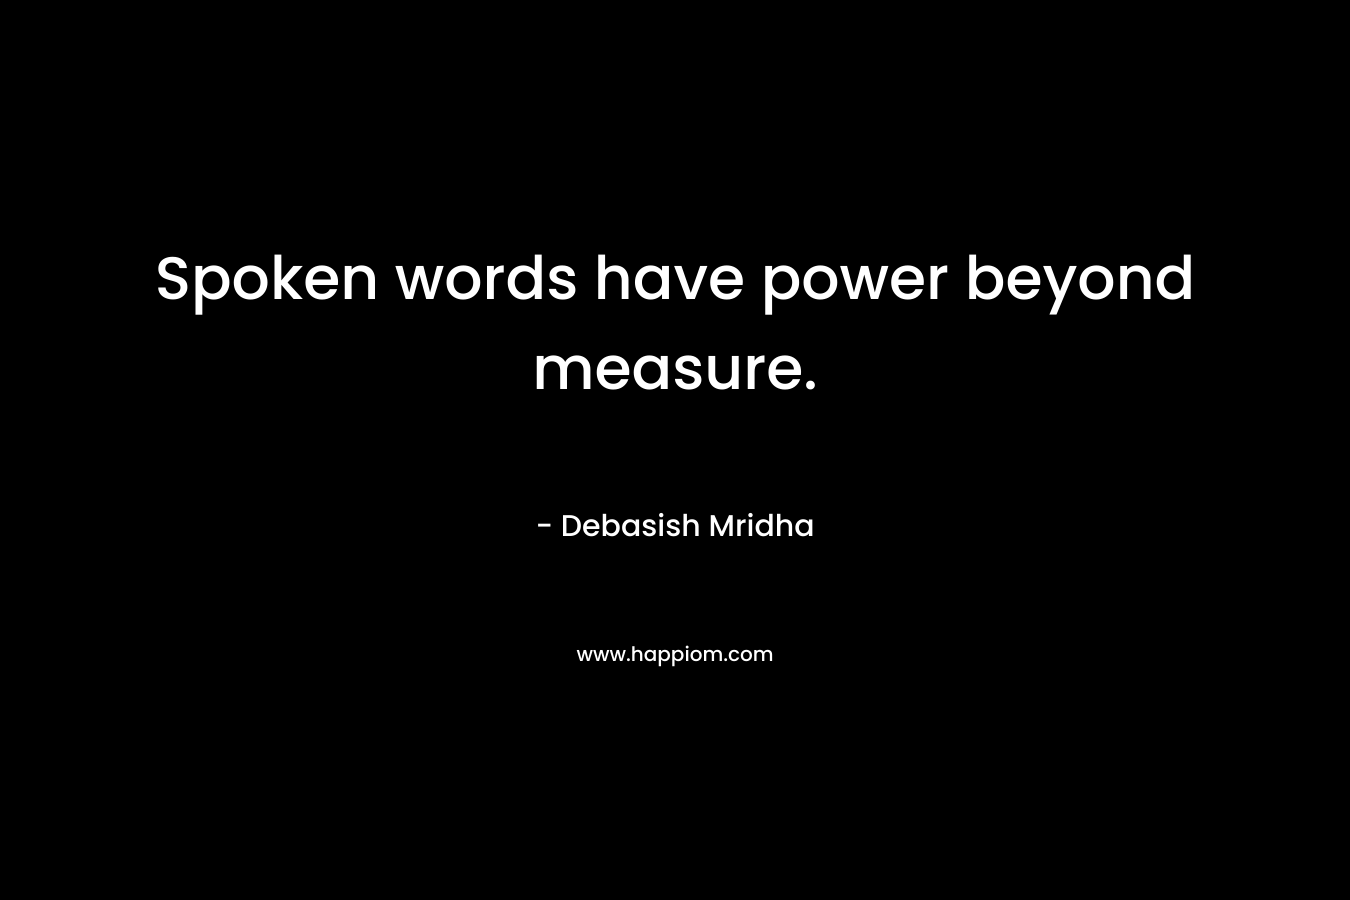 Spoken words have power beyond measure.